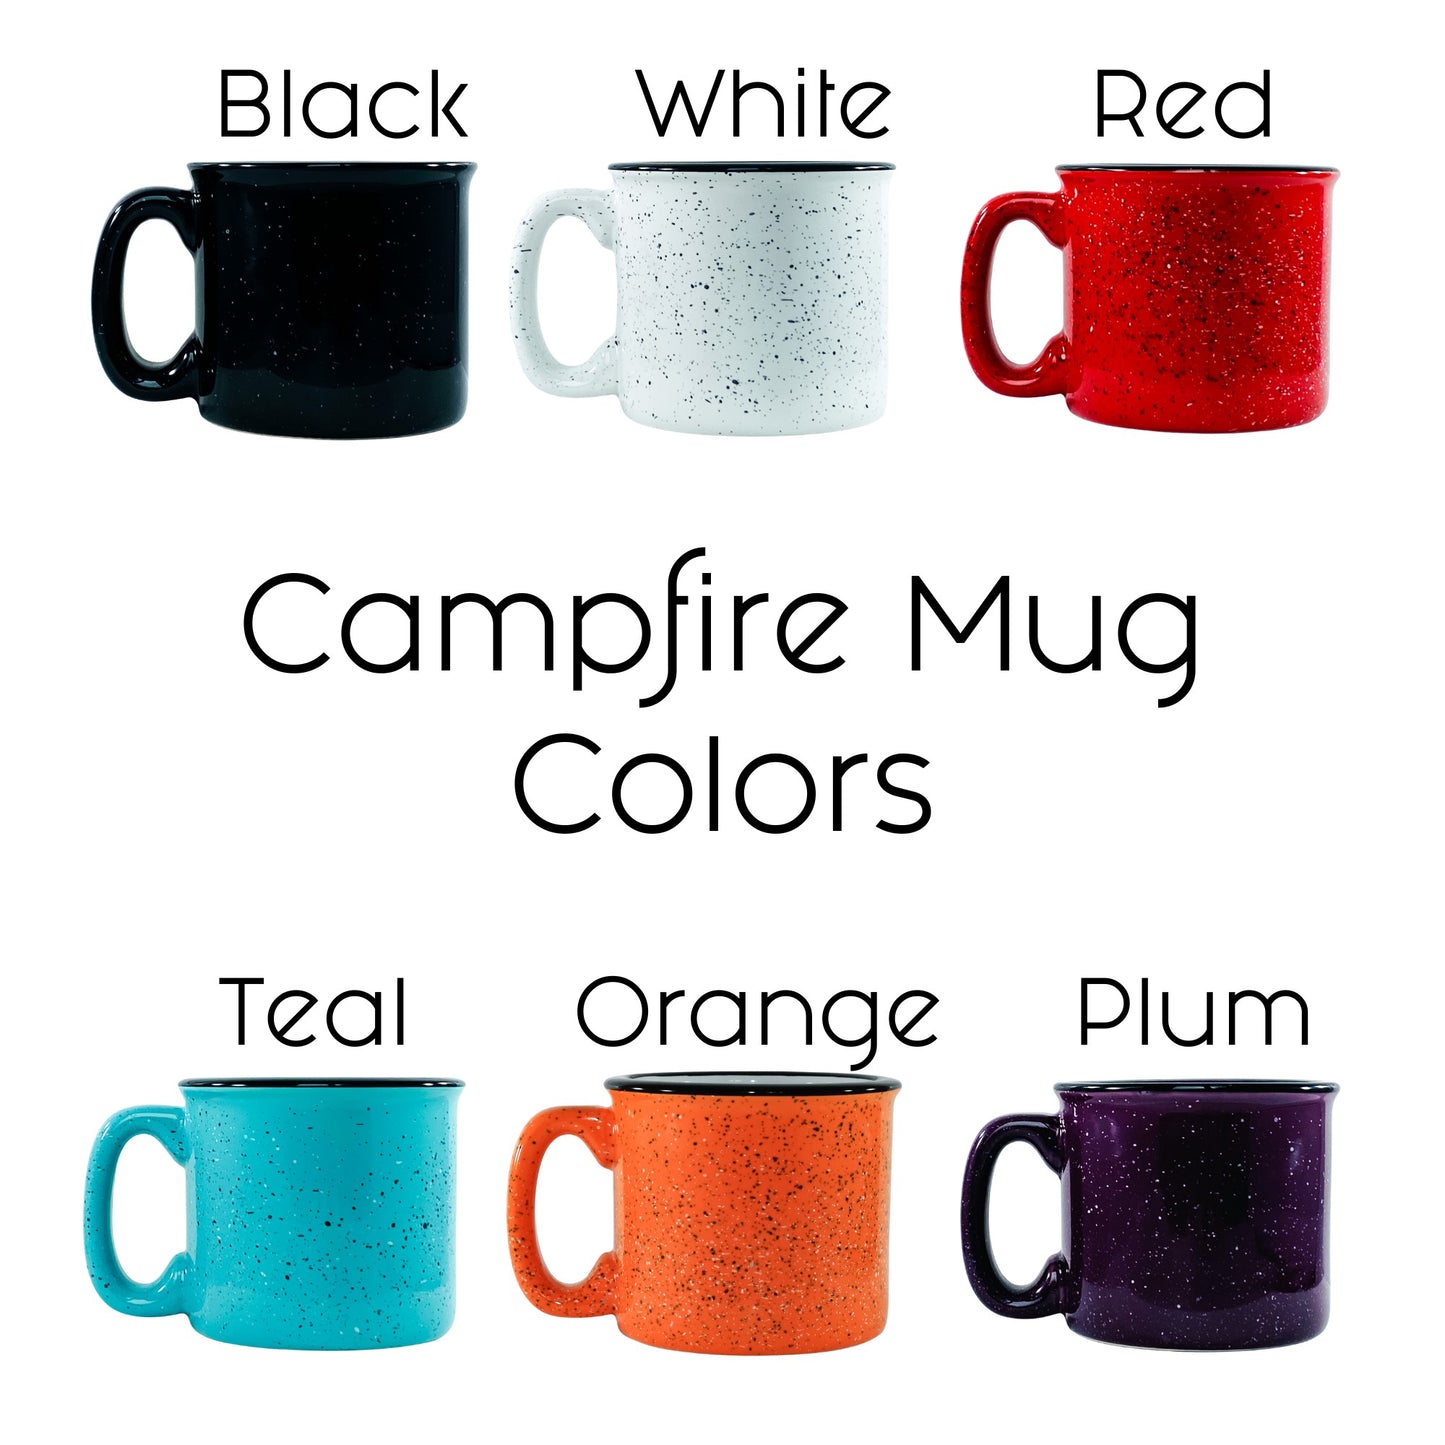 Choose Joy Campfire Mug